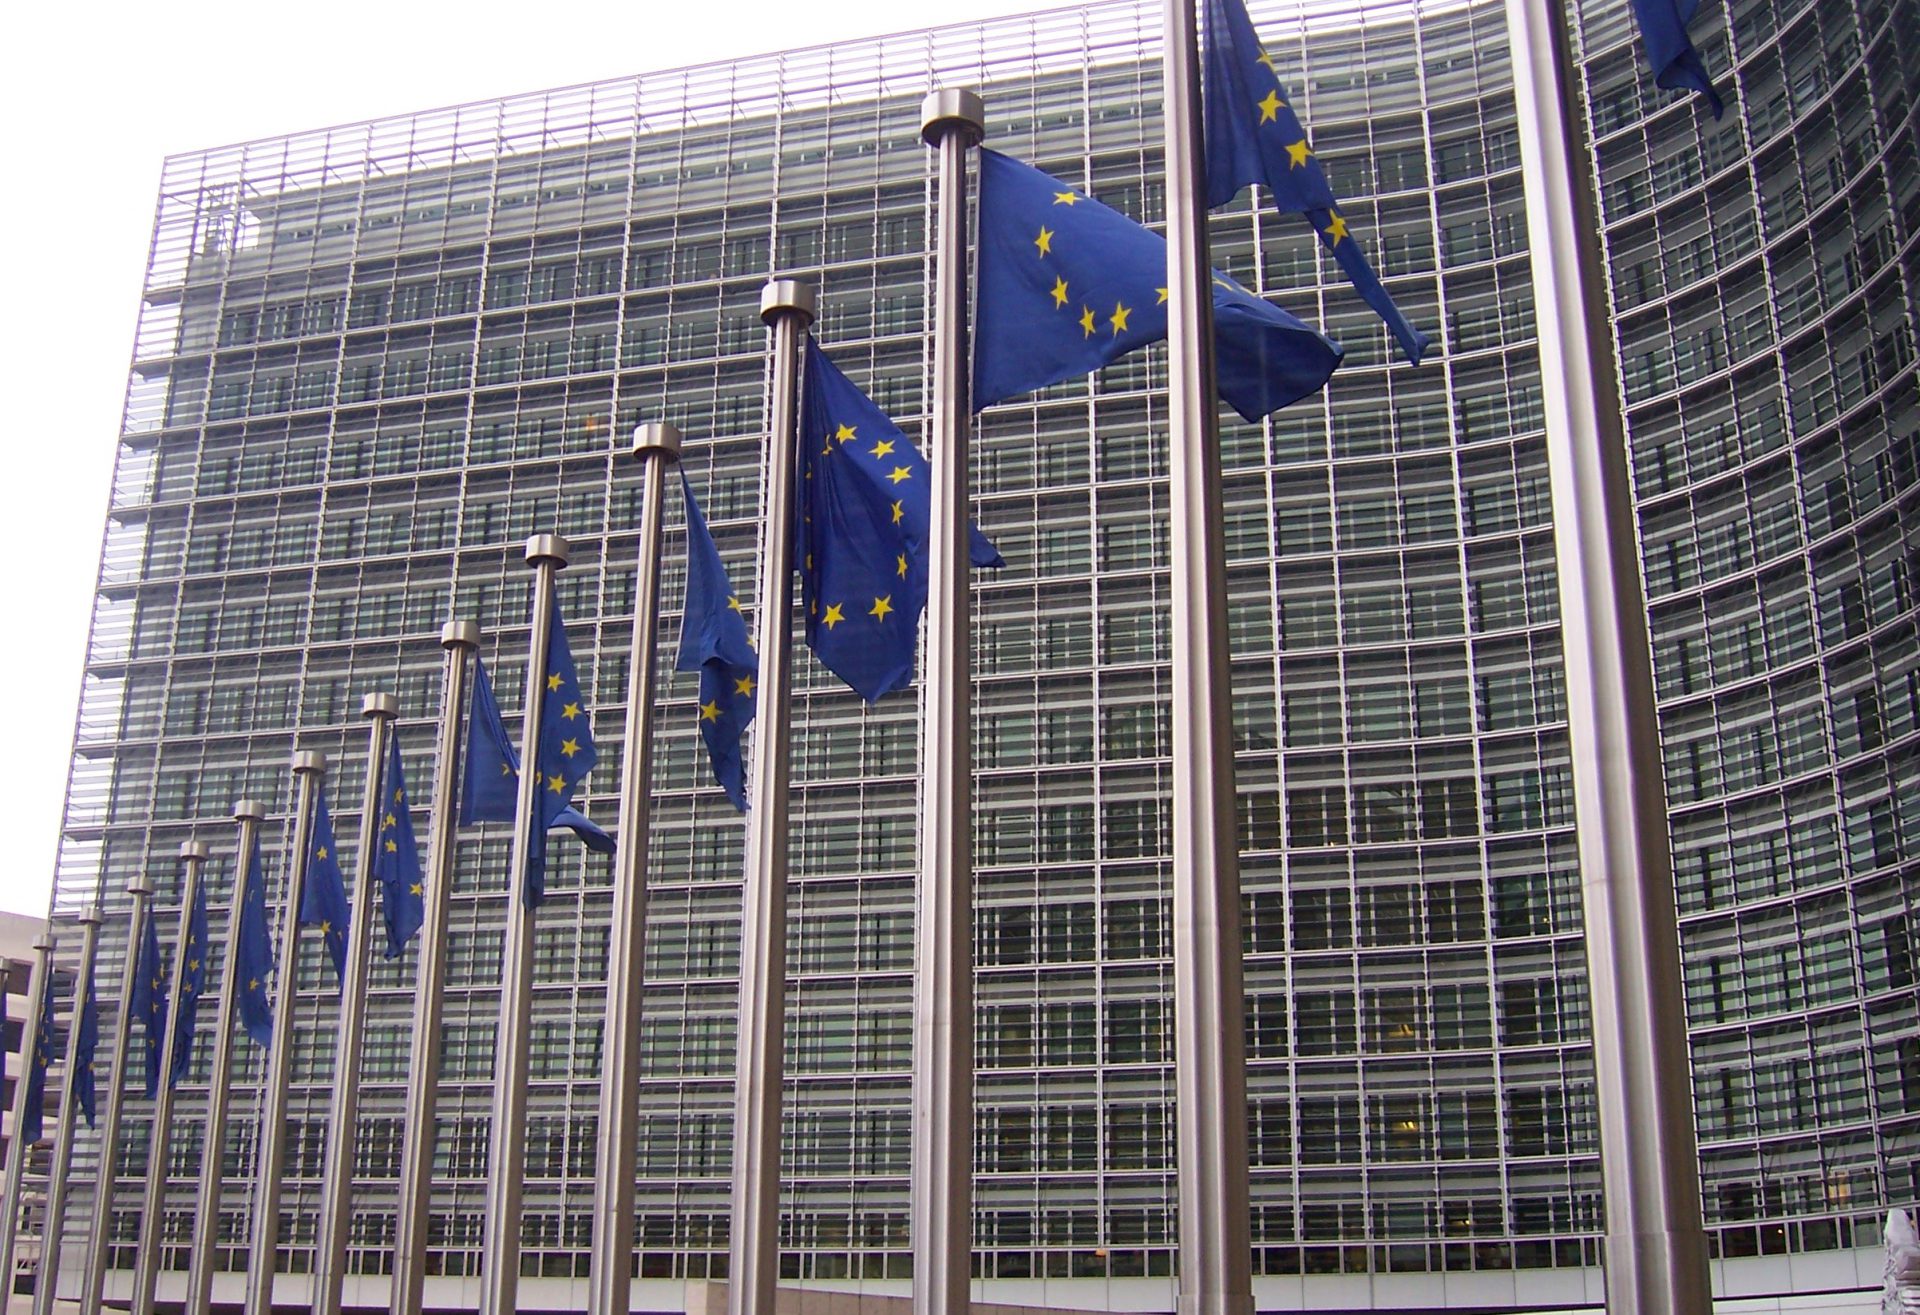 Banderas_europeas_en_la_Comisión_Europea